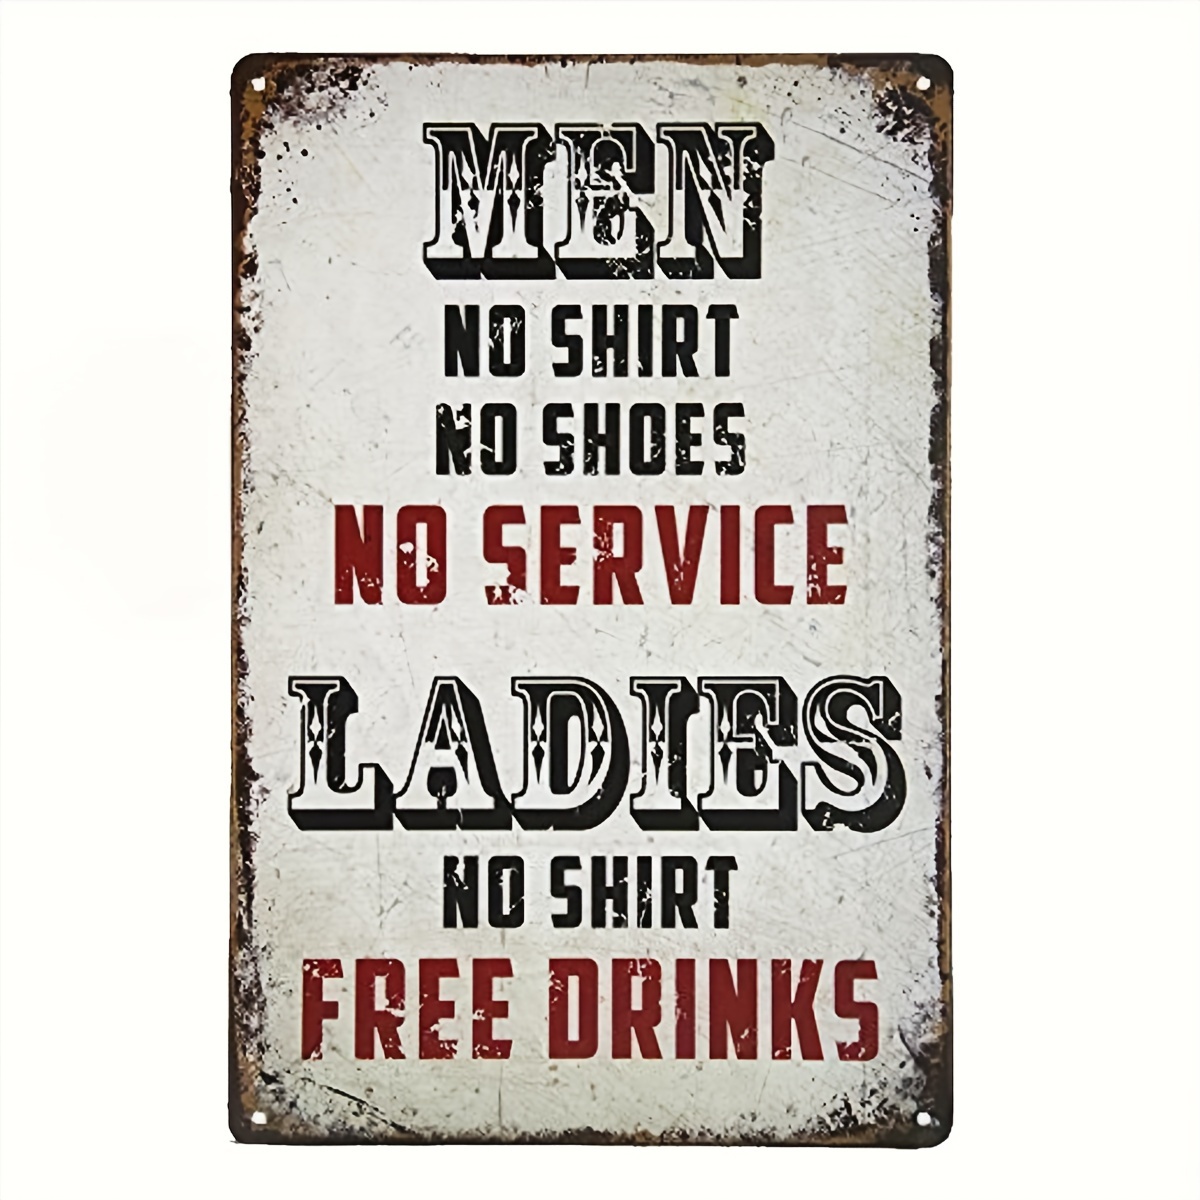 

Men No Shirt No Shoes No Service Ladies Free Drinks Vintage Metal Tin Sign - Retro Pub Bar Decor Artistic Drawing Set - 12x8 Inch